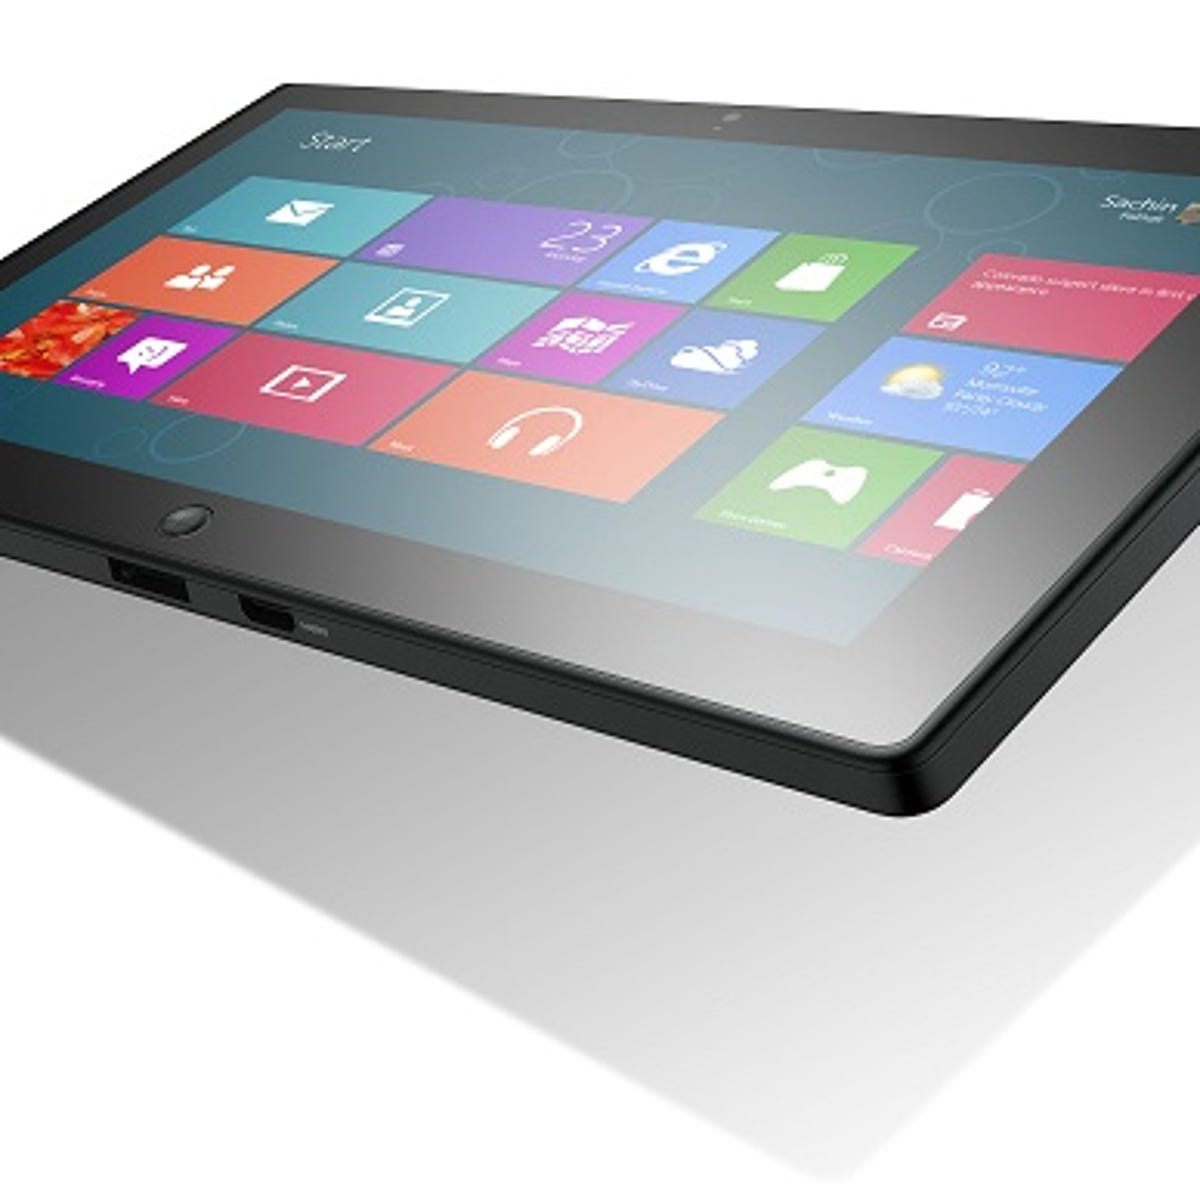 Lenovo thinkpad atom tablet windows 8 pro carhartt wip senna